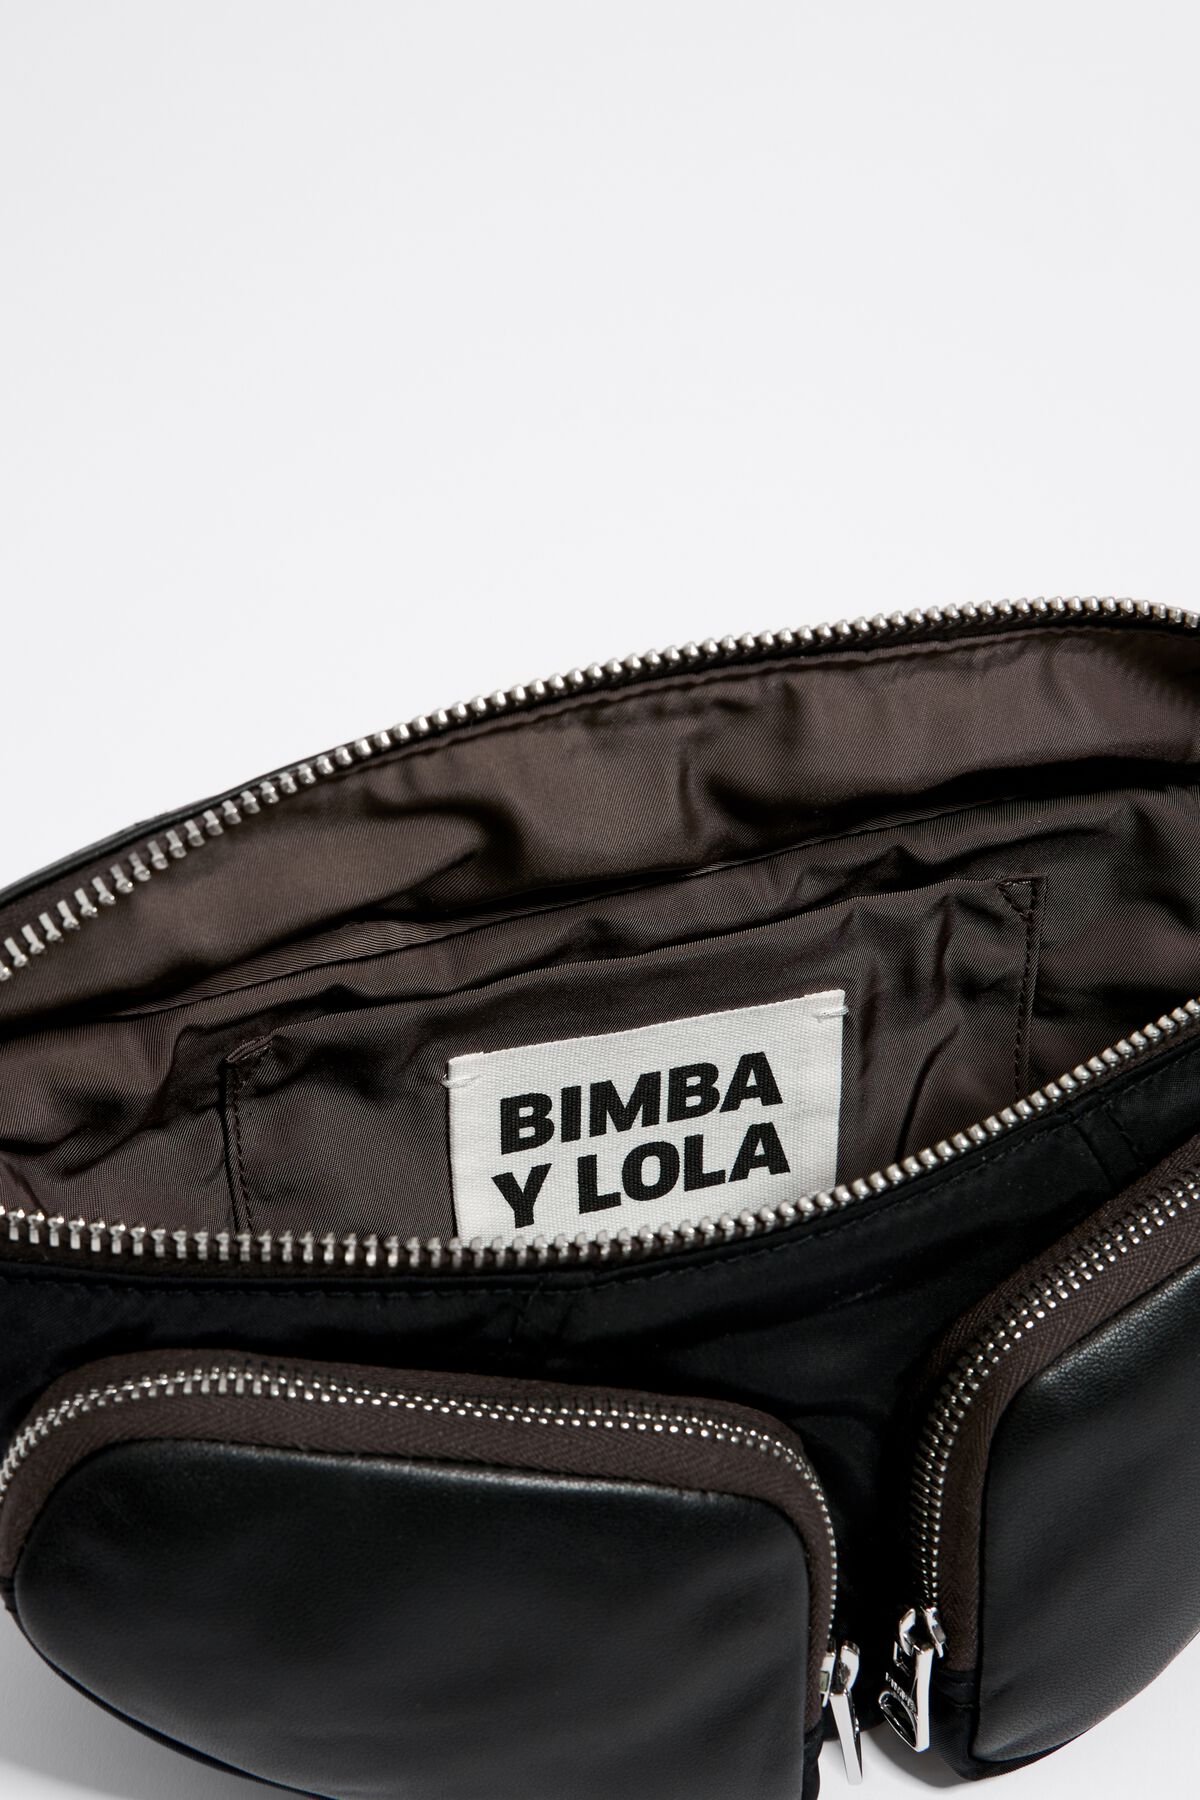 S smooth black leather Pocket bumbag